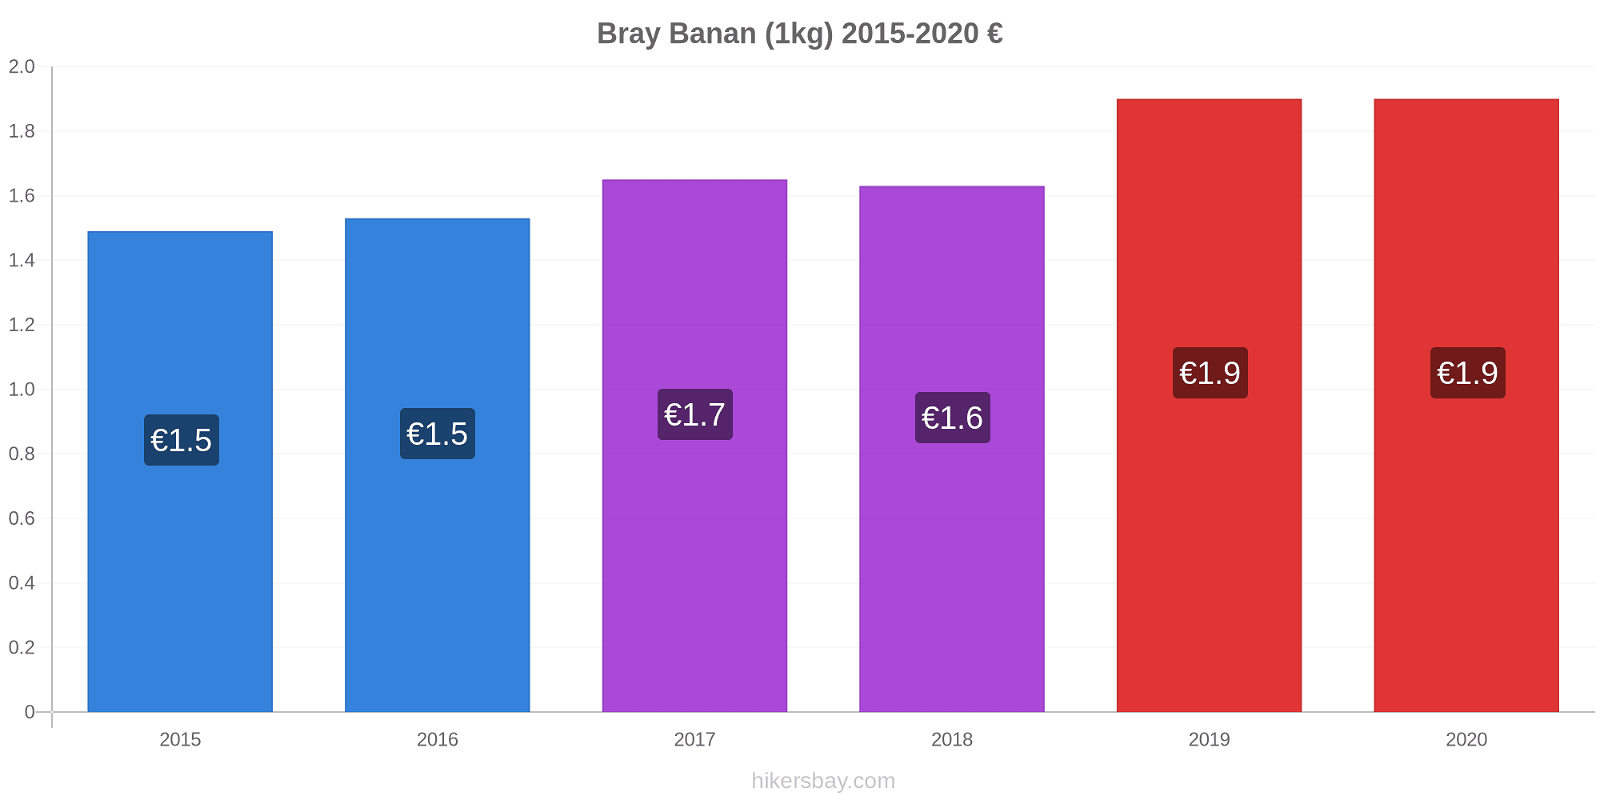 Bray prisændringer Banan (1kg) hikersbay.com